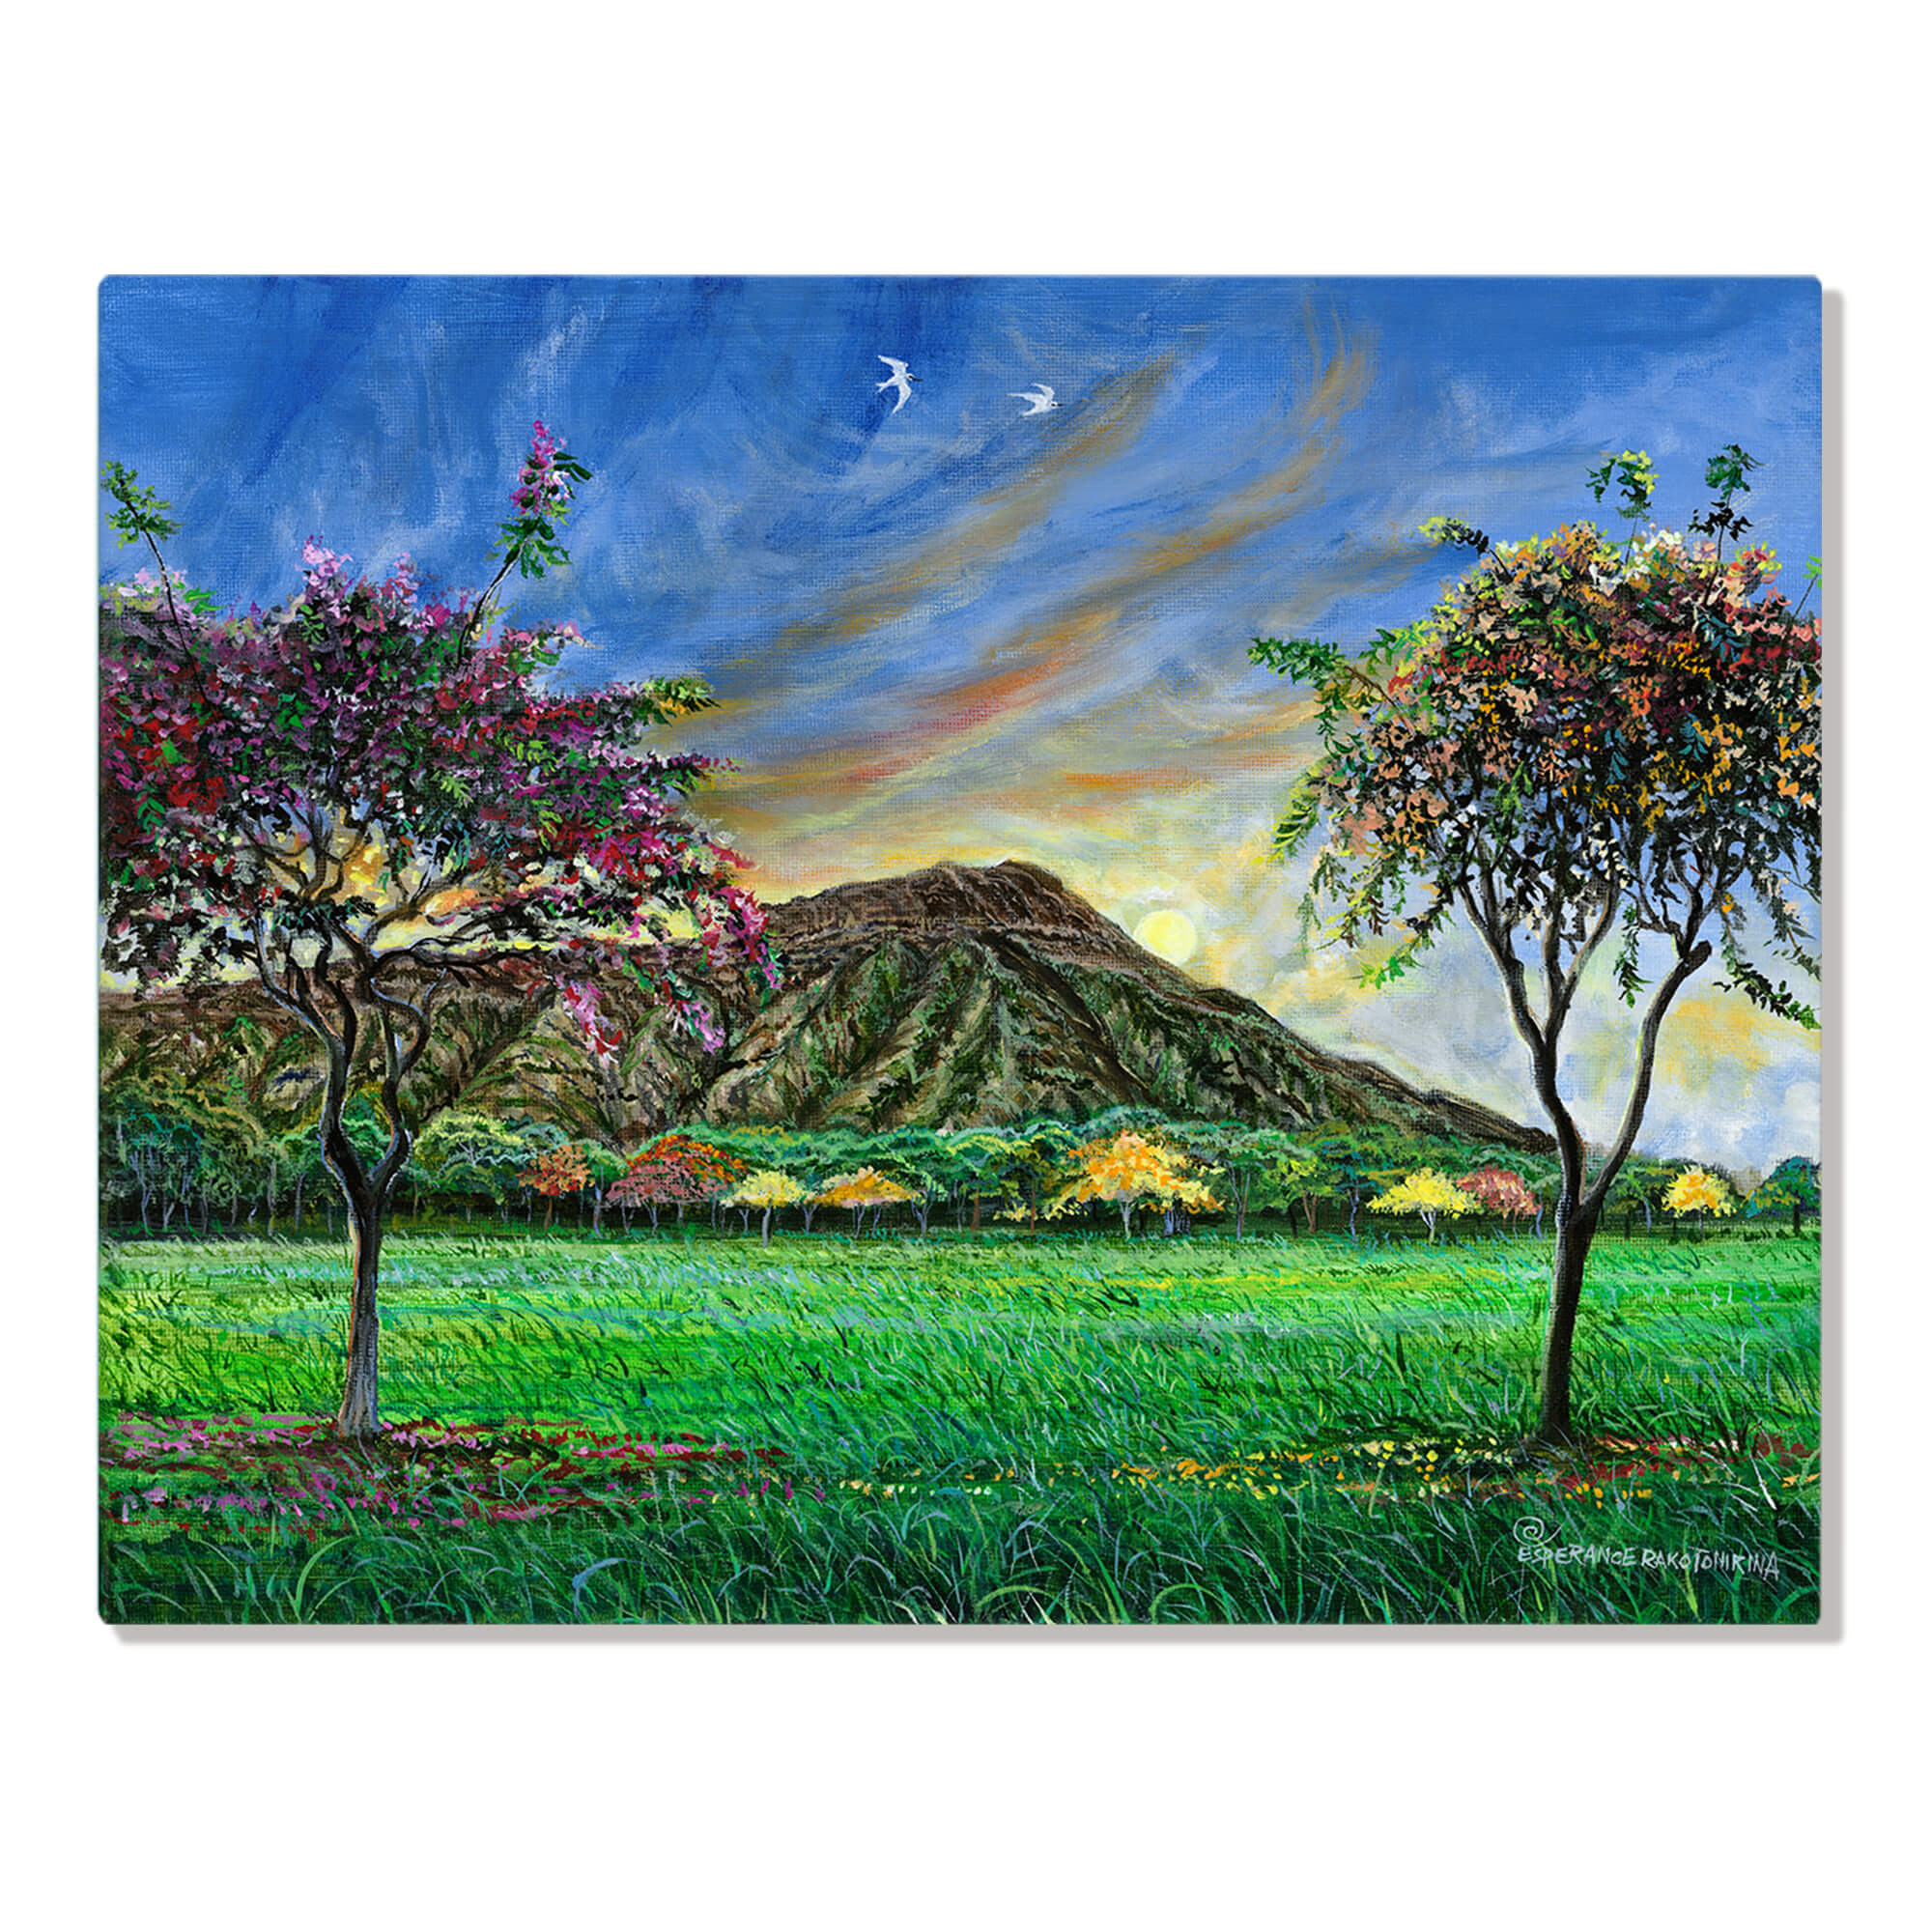  Metal art print showcasing a Scenic landscape featuring a majestic mountain adorned with lush green trees by  hawaii artist Esperance Rakotonirina